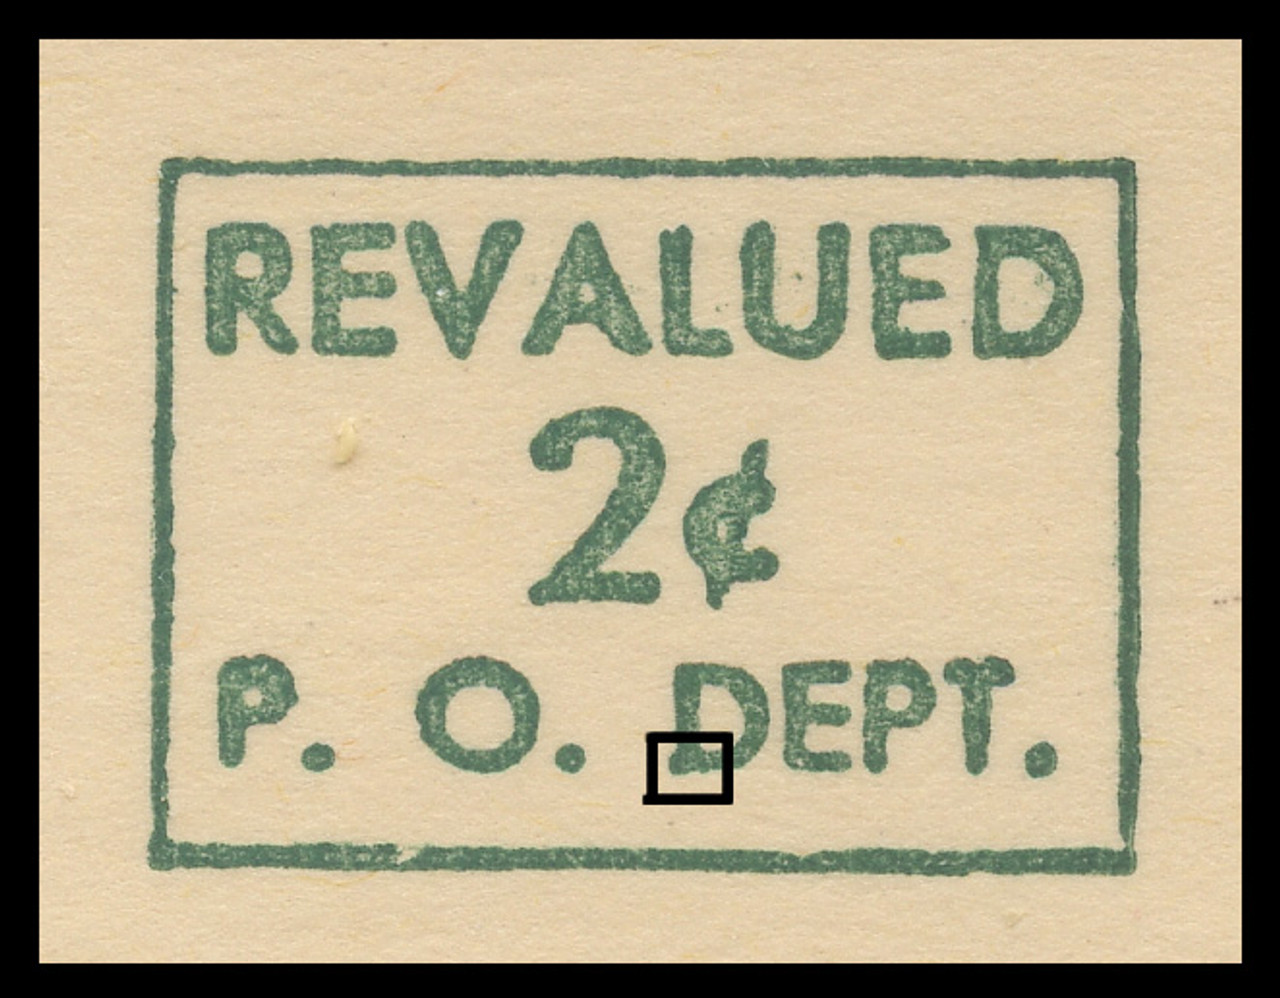 USA Scott # UX  41/UPSS #S57-3, 1952 2c on 1c Thomas Jefferson (UX27), green on buff, Surcharge 3 - Mint Postal Card